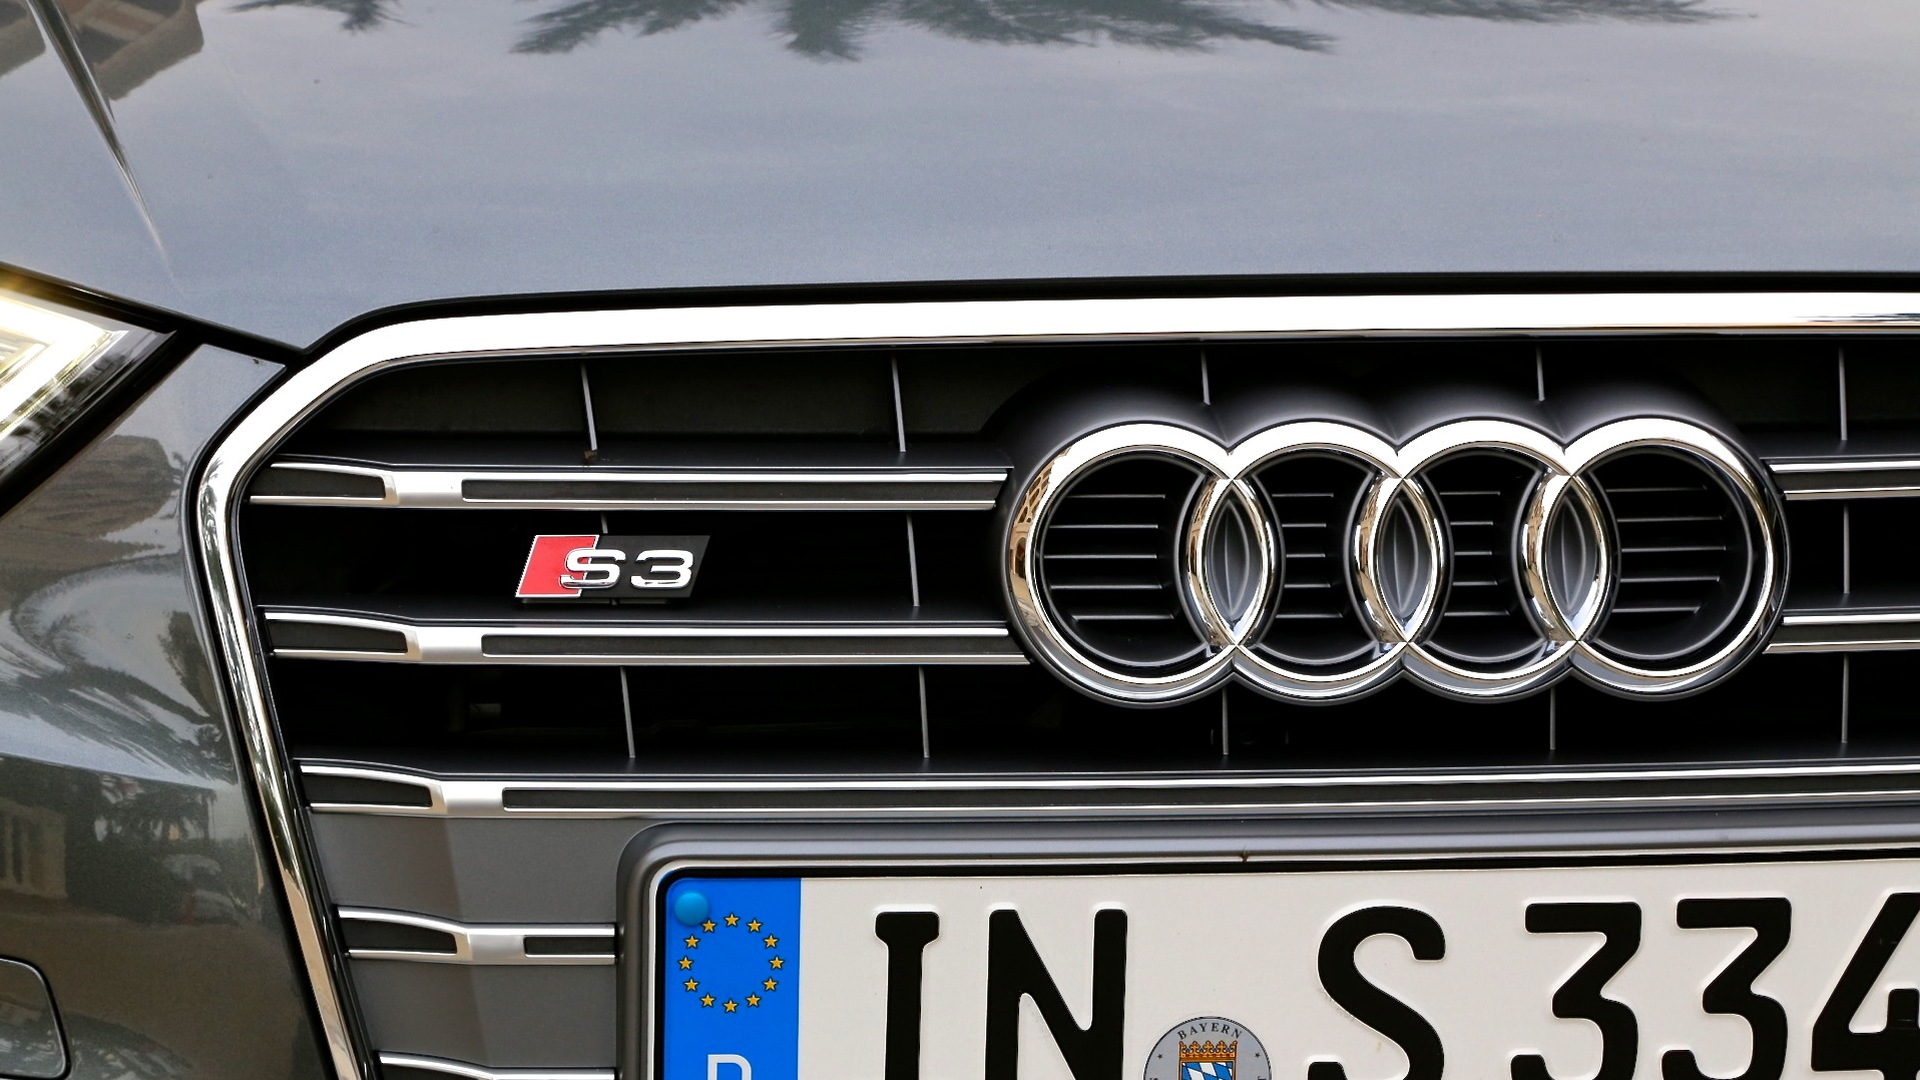 2015 Audi S3 First Drive, Monte Carlo